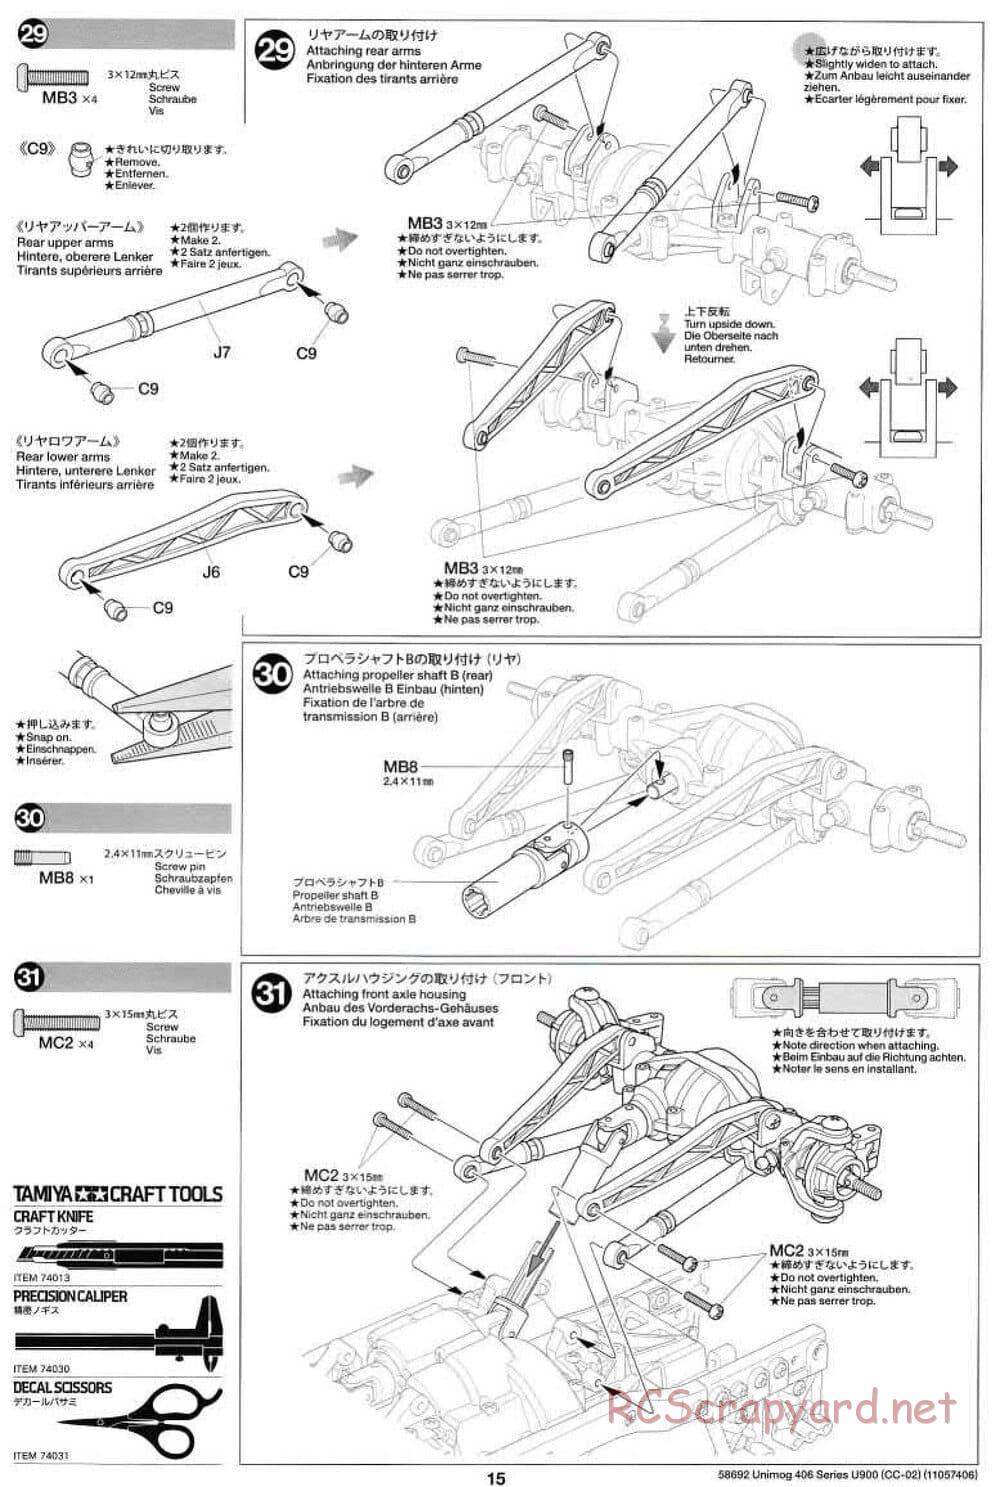 Tamiya - Mercedes-Benz Unimog 406 Series U900 - CC-02 Chassis - Manual - Page 15